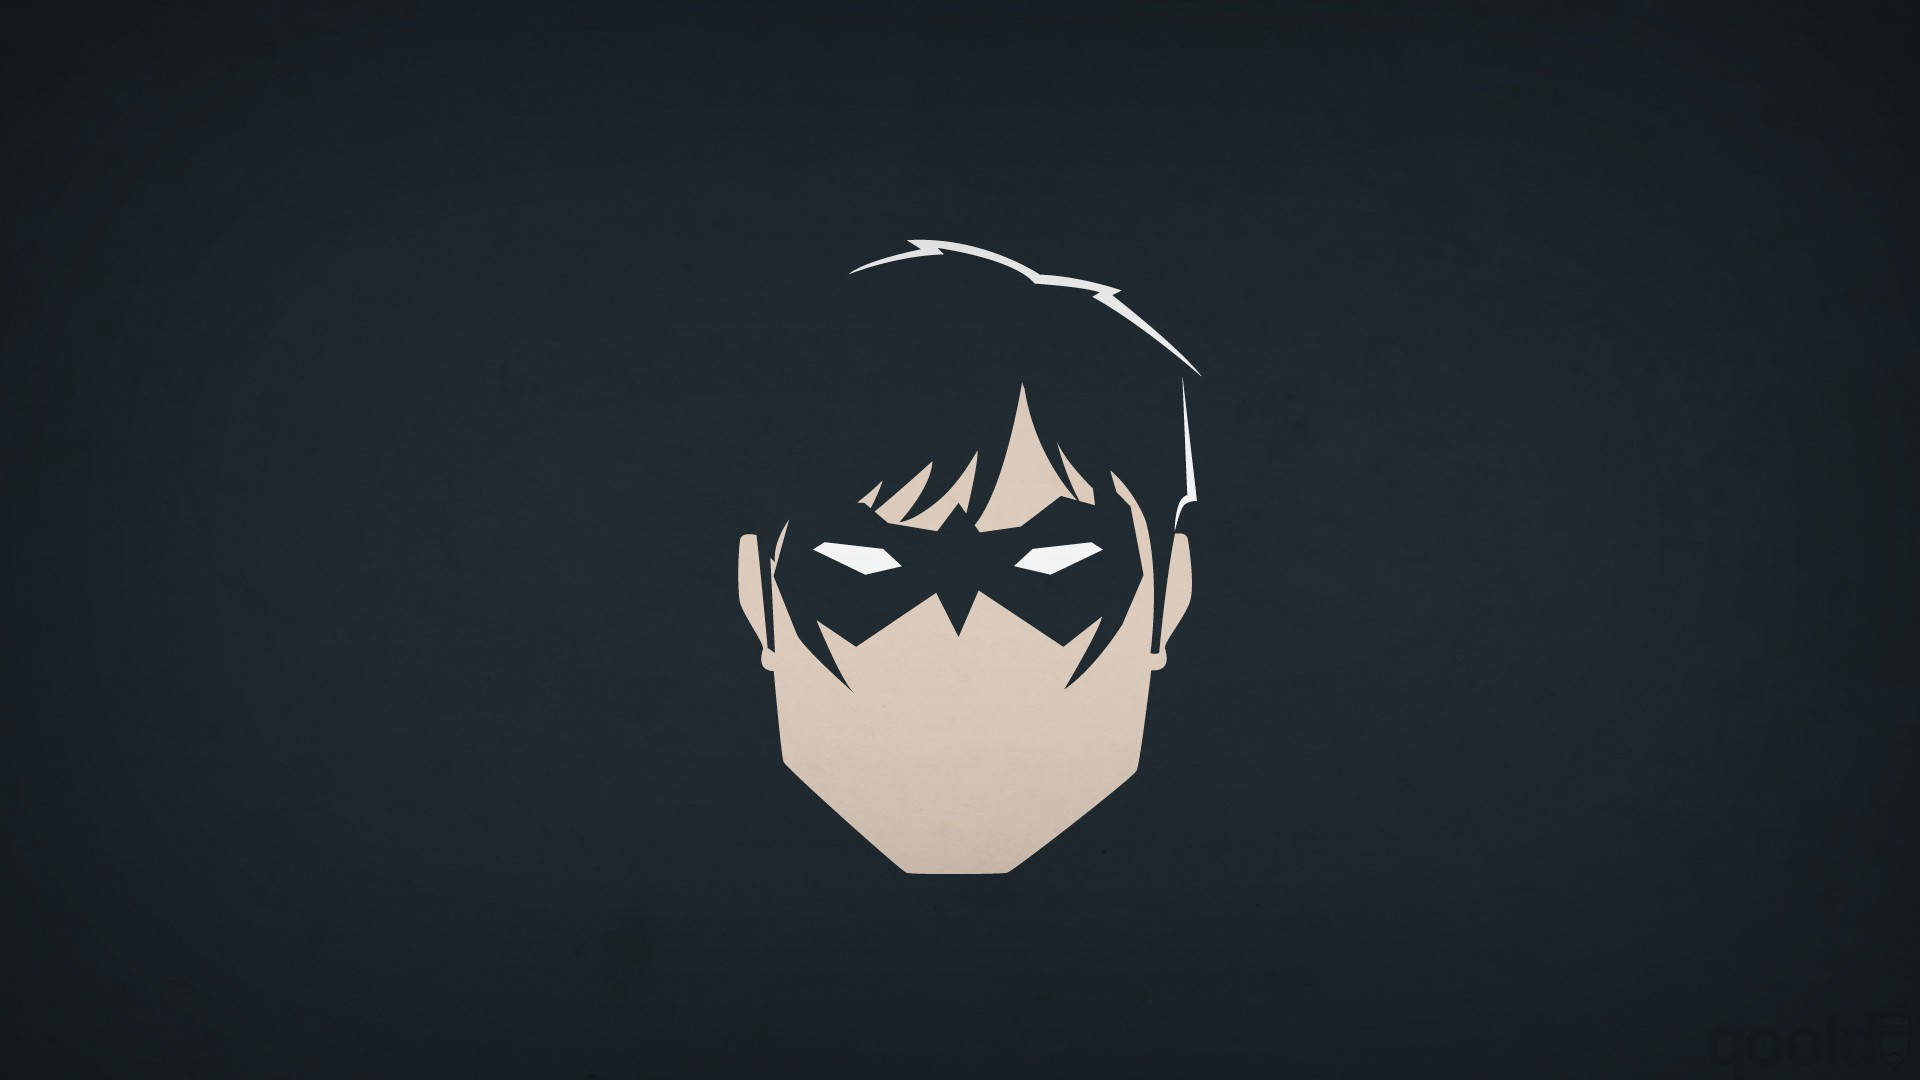 Hd Superhero Dick Grayson Background